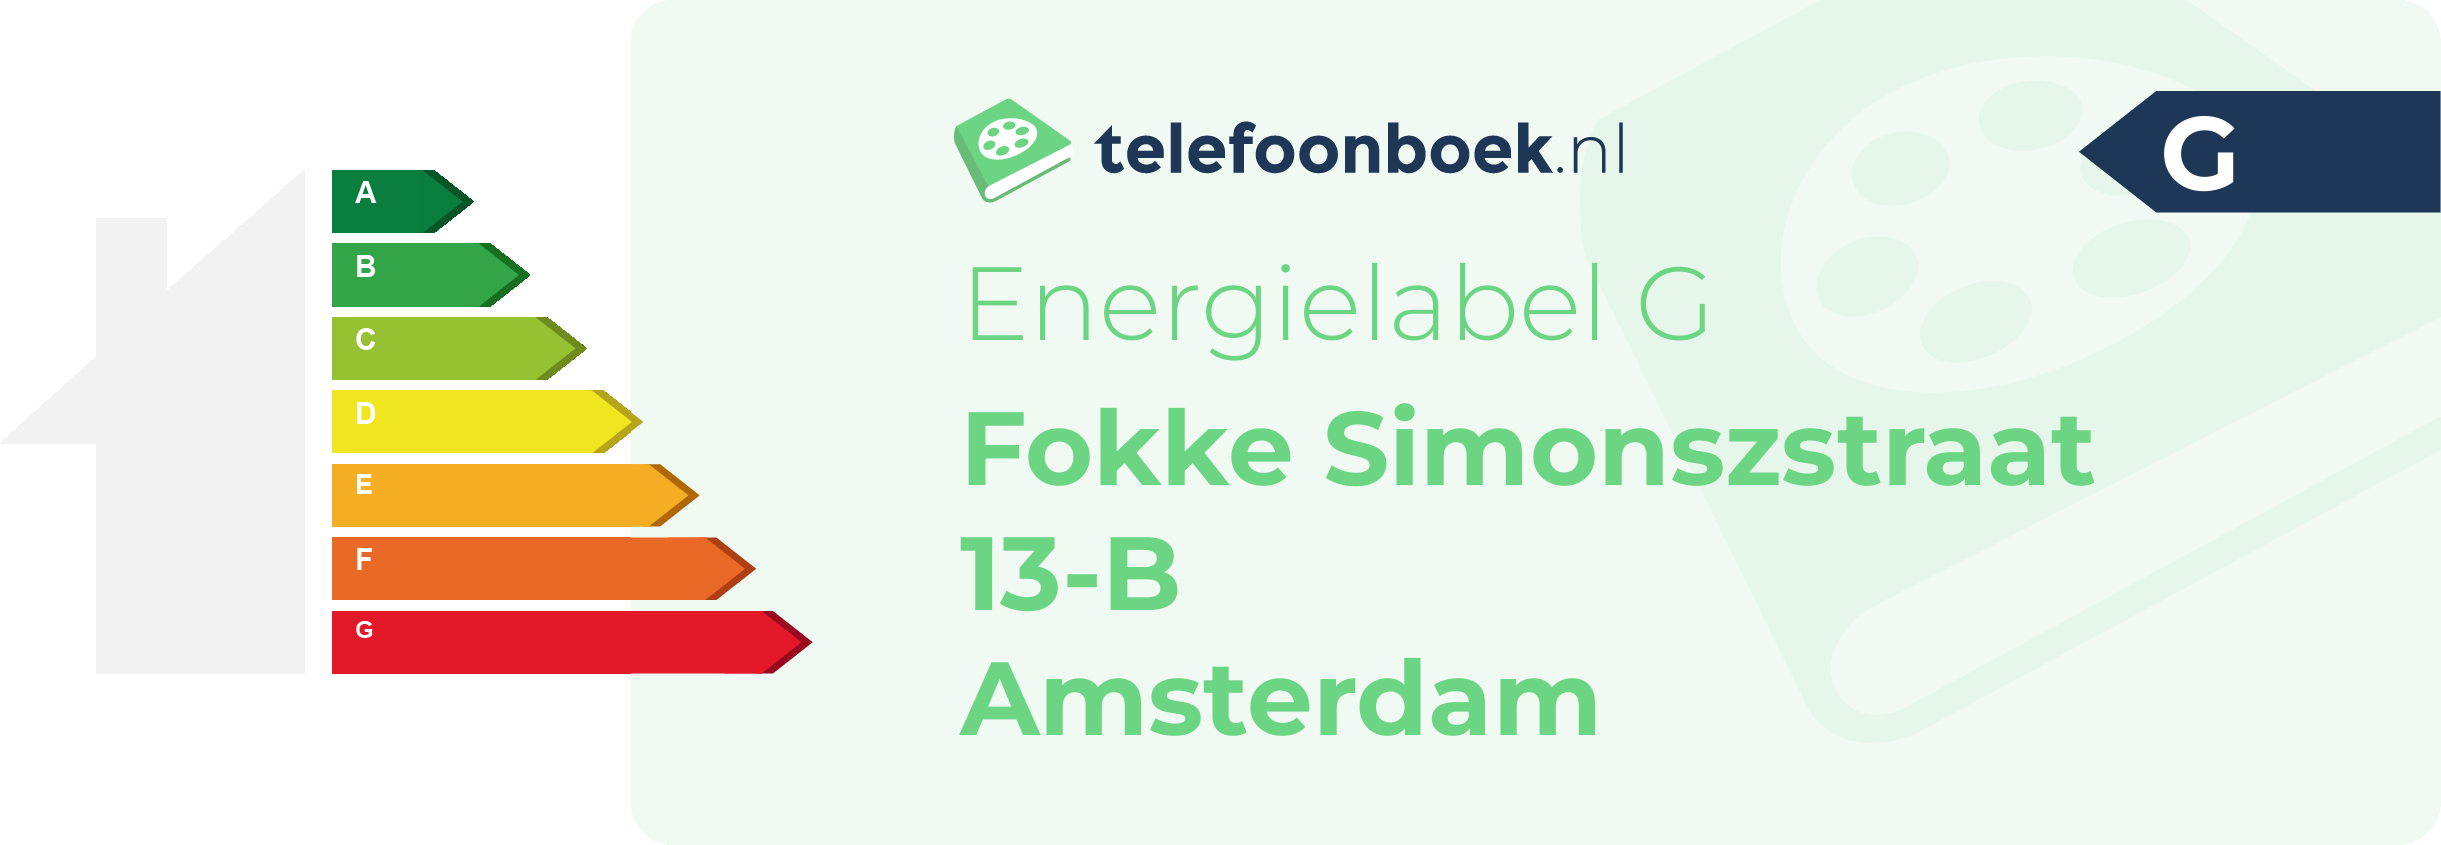 Energielabel Fokke Simonszstraat 13-B Amsterdam